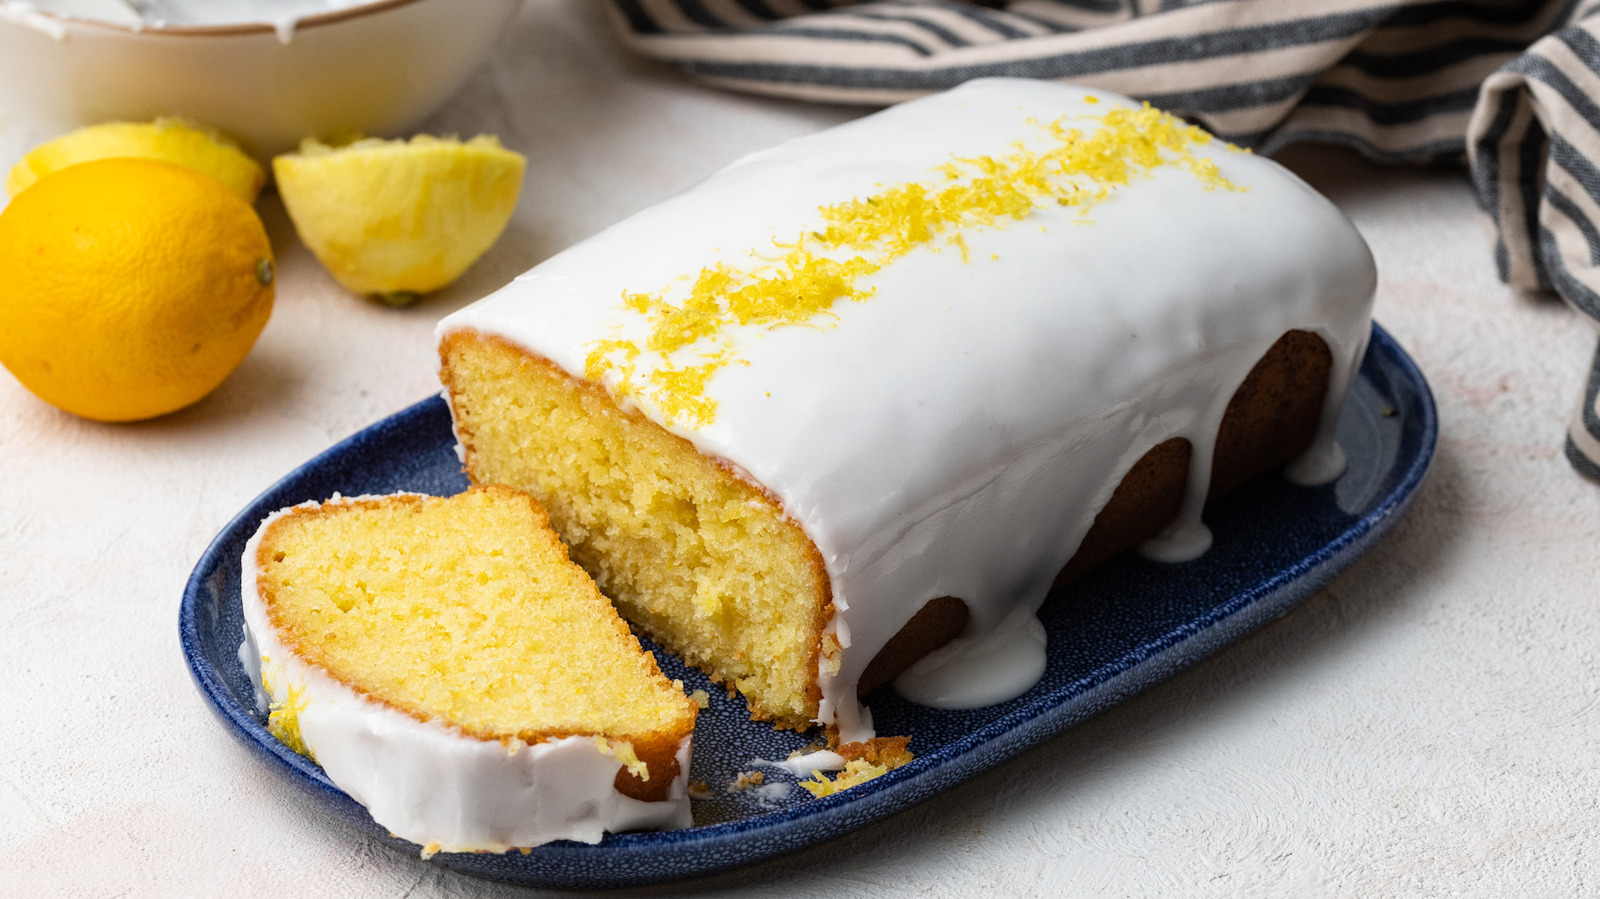 https://www.tastingtable.com/img/gallery/zingy-lemon-buttermilk-pound-cake-recipe/l-intro-1670437500.jpg